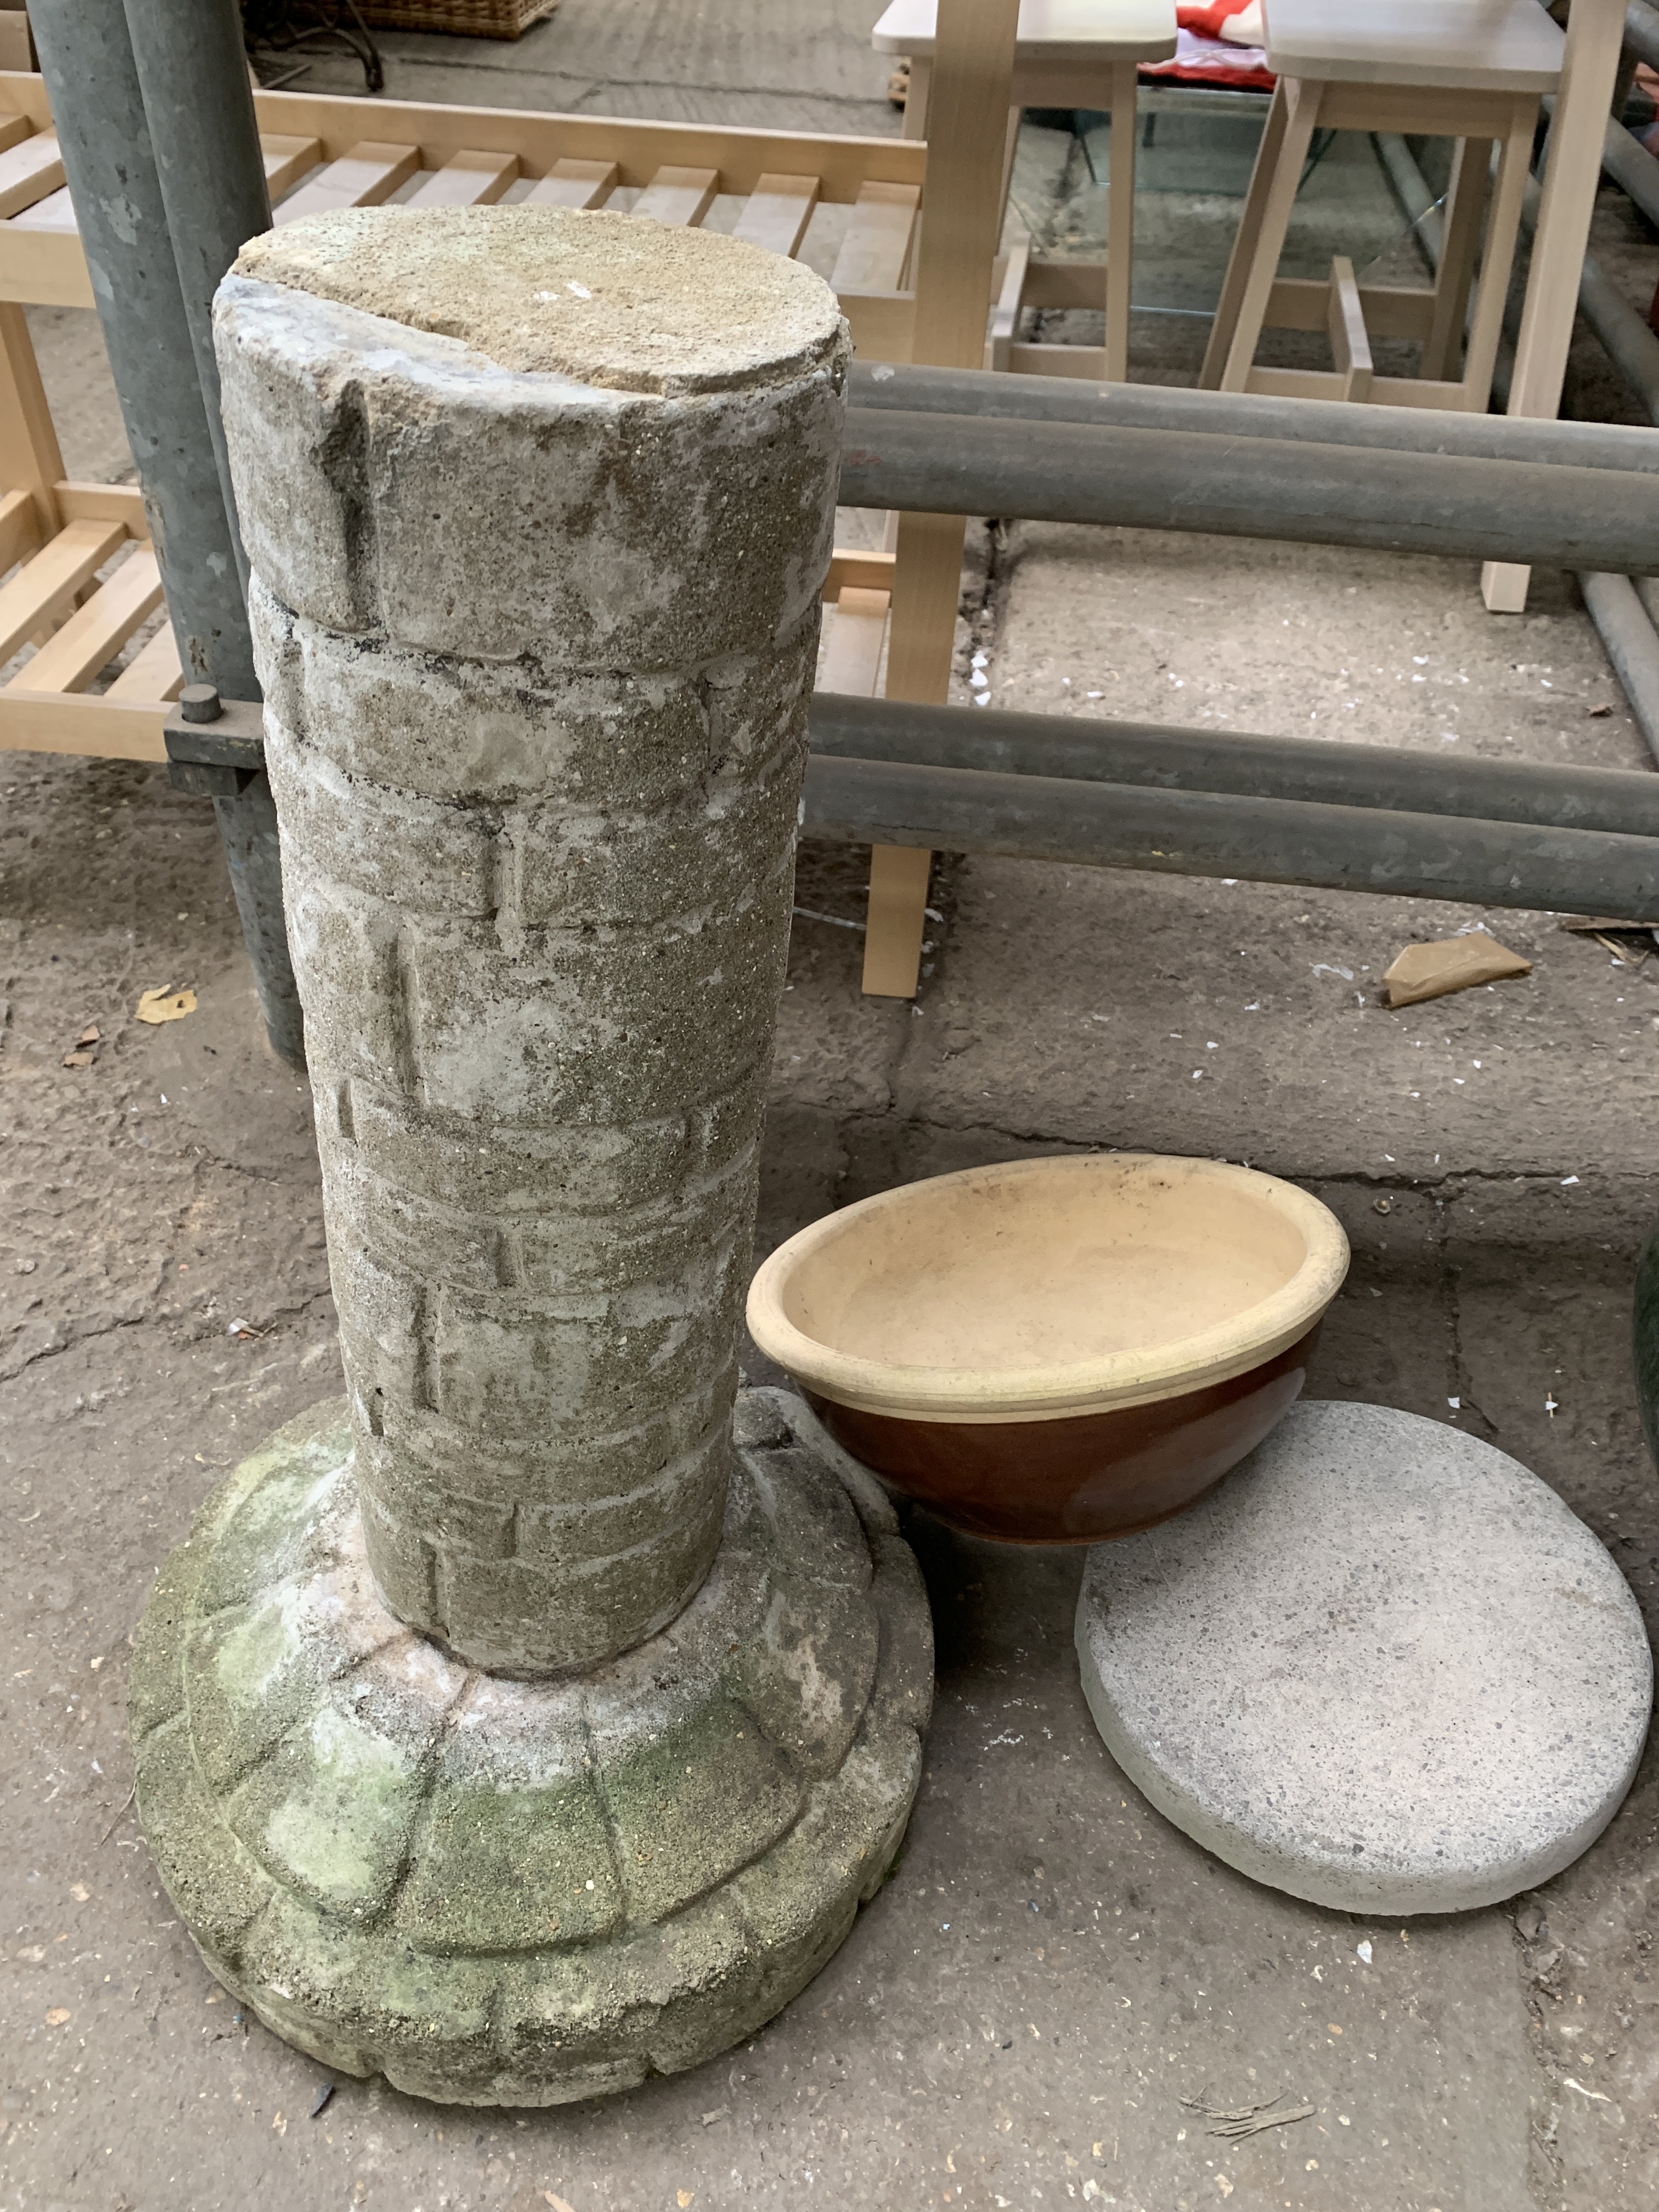 Concrete plinth, ceramic pot and two further pots